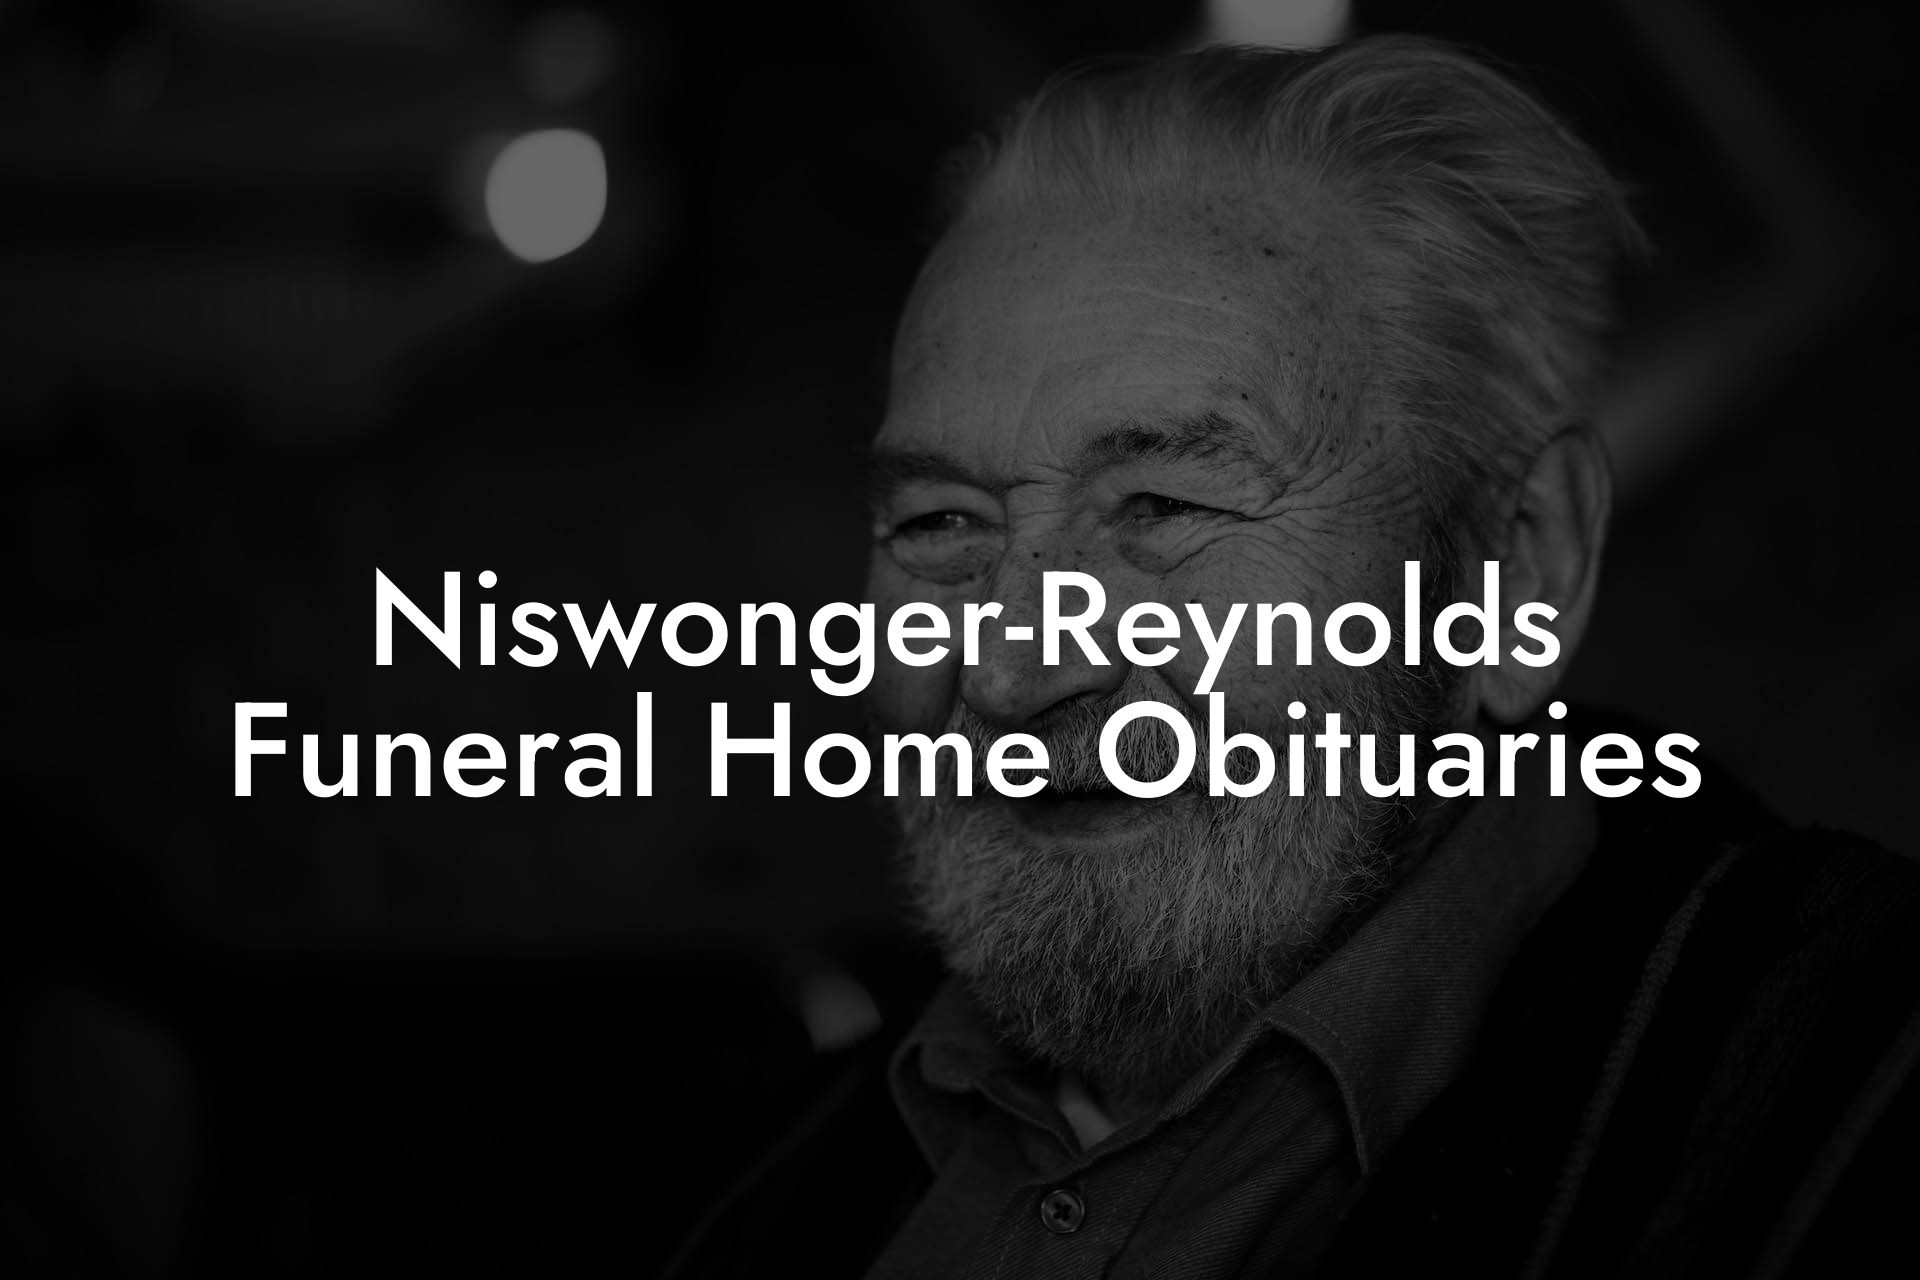 Niswonger-Reynolds Funeral Home Obituaries